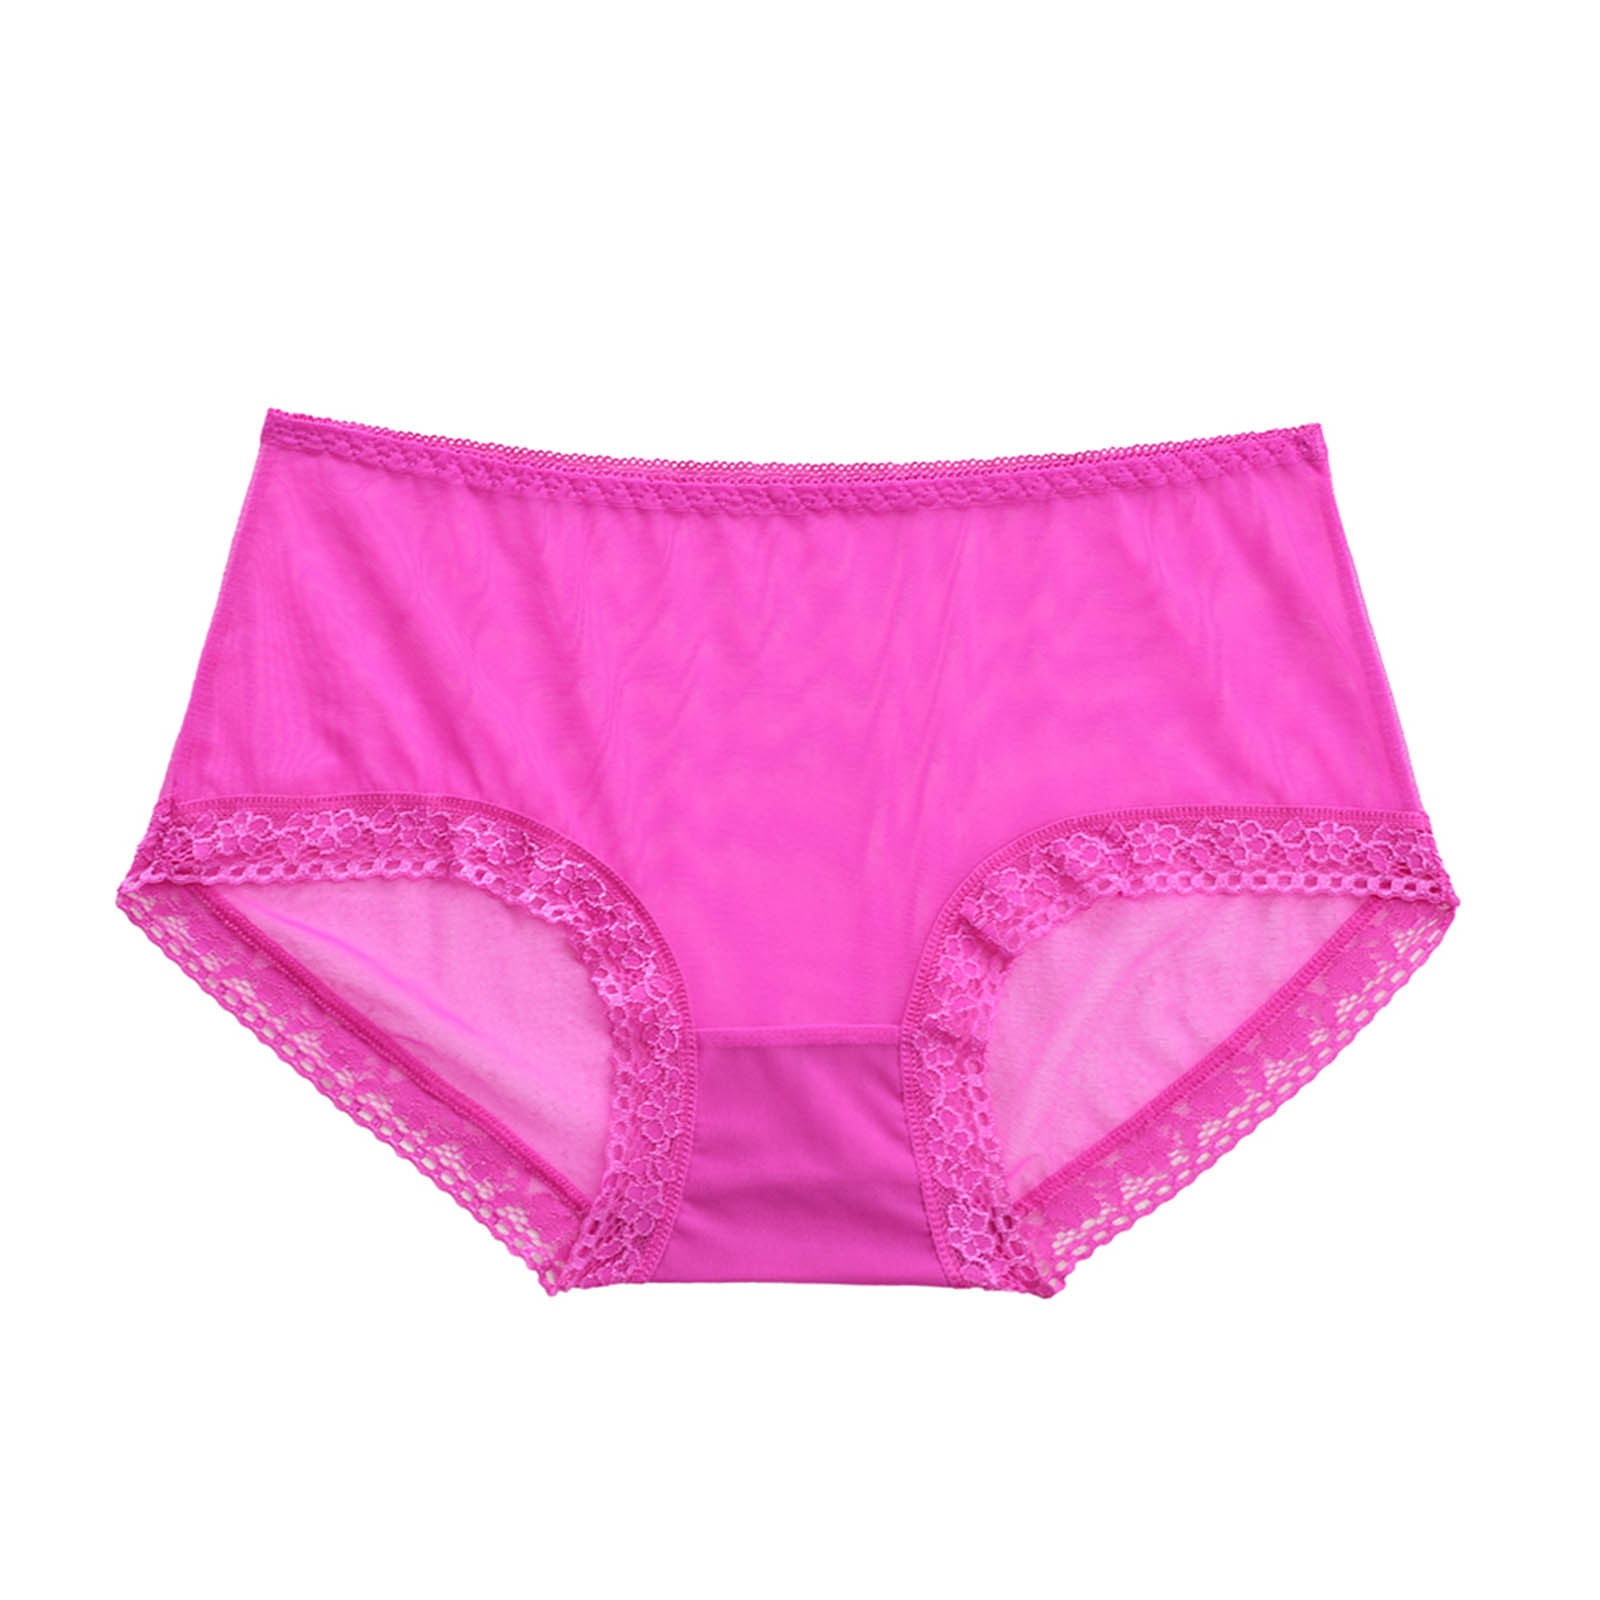 adviicd Sex​ Lingerie Women's Disposable Underwear for Travel